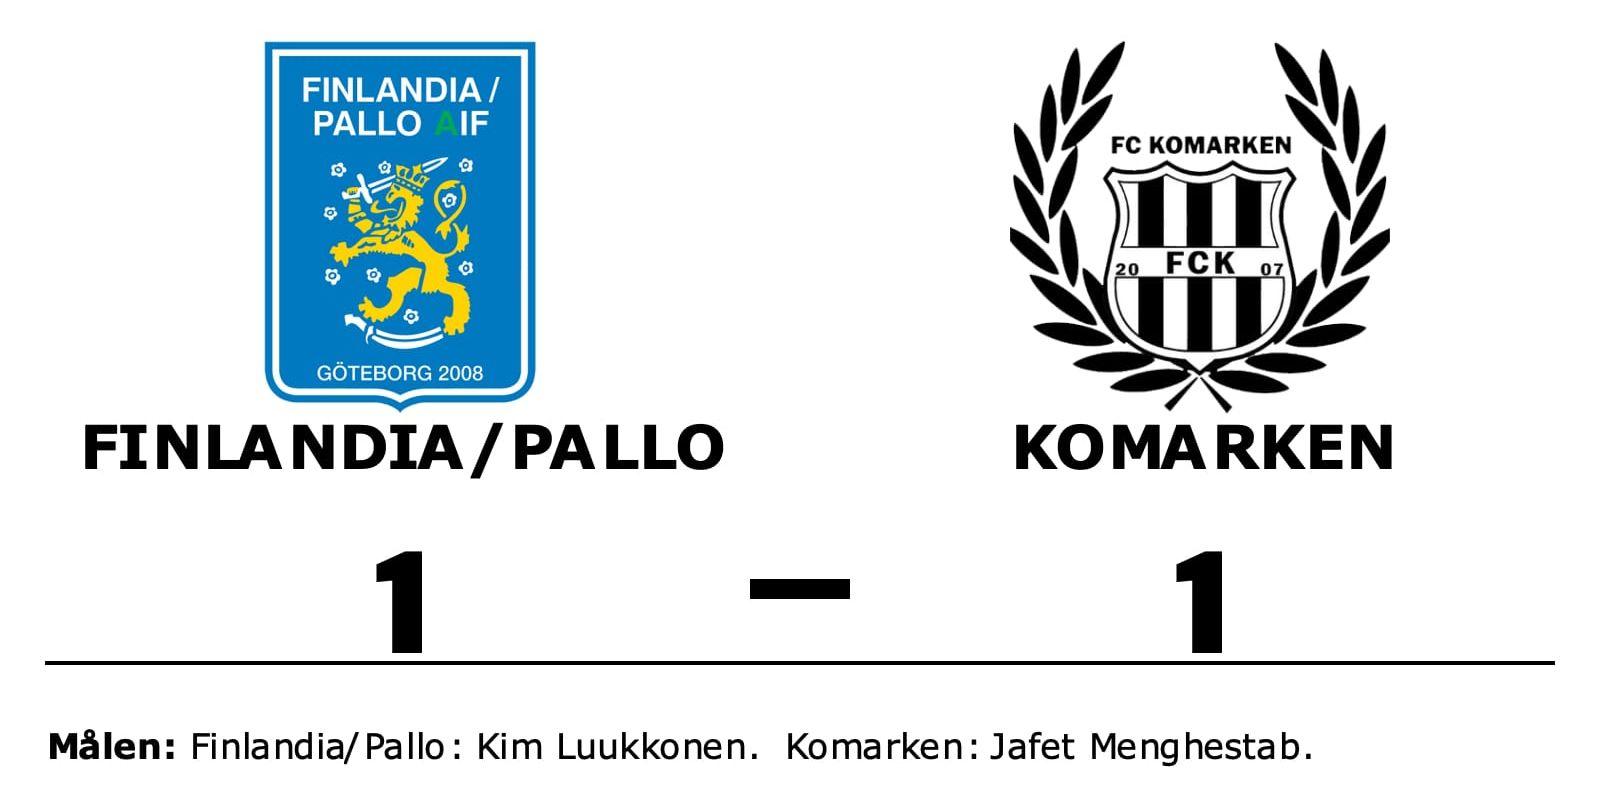 Finlandia/Pallo spelade lika mot Komarken